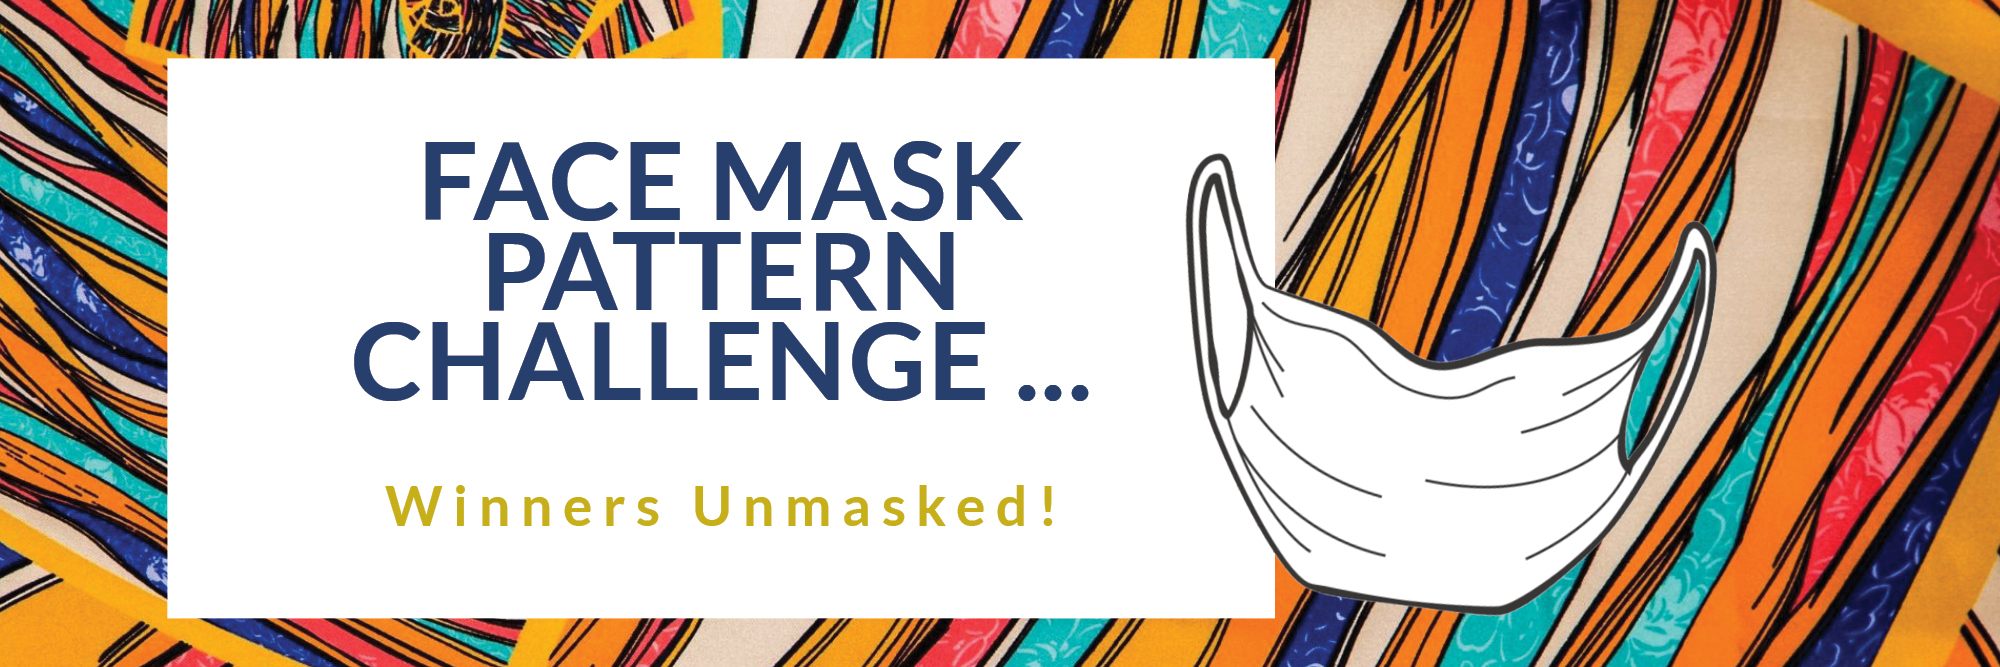 facemask-winner-challenge